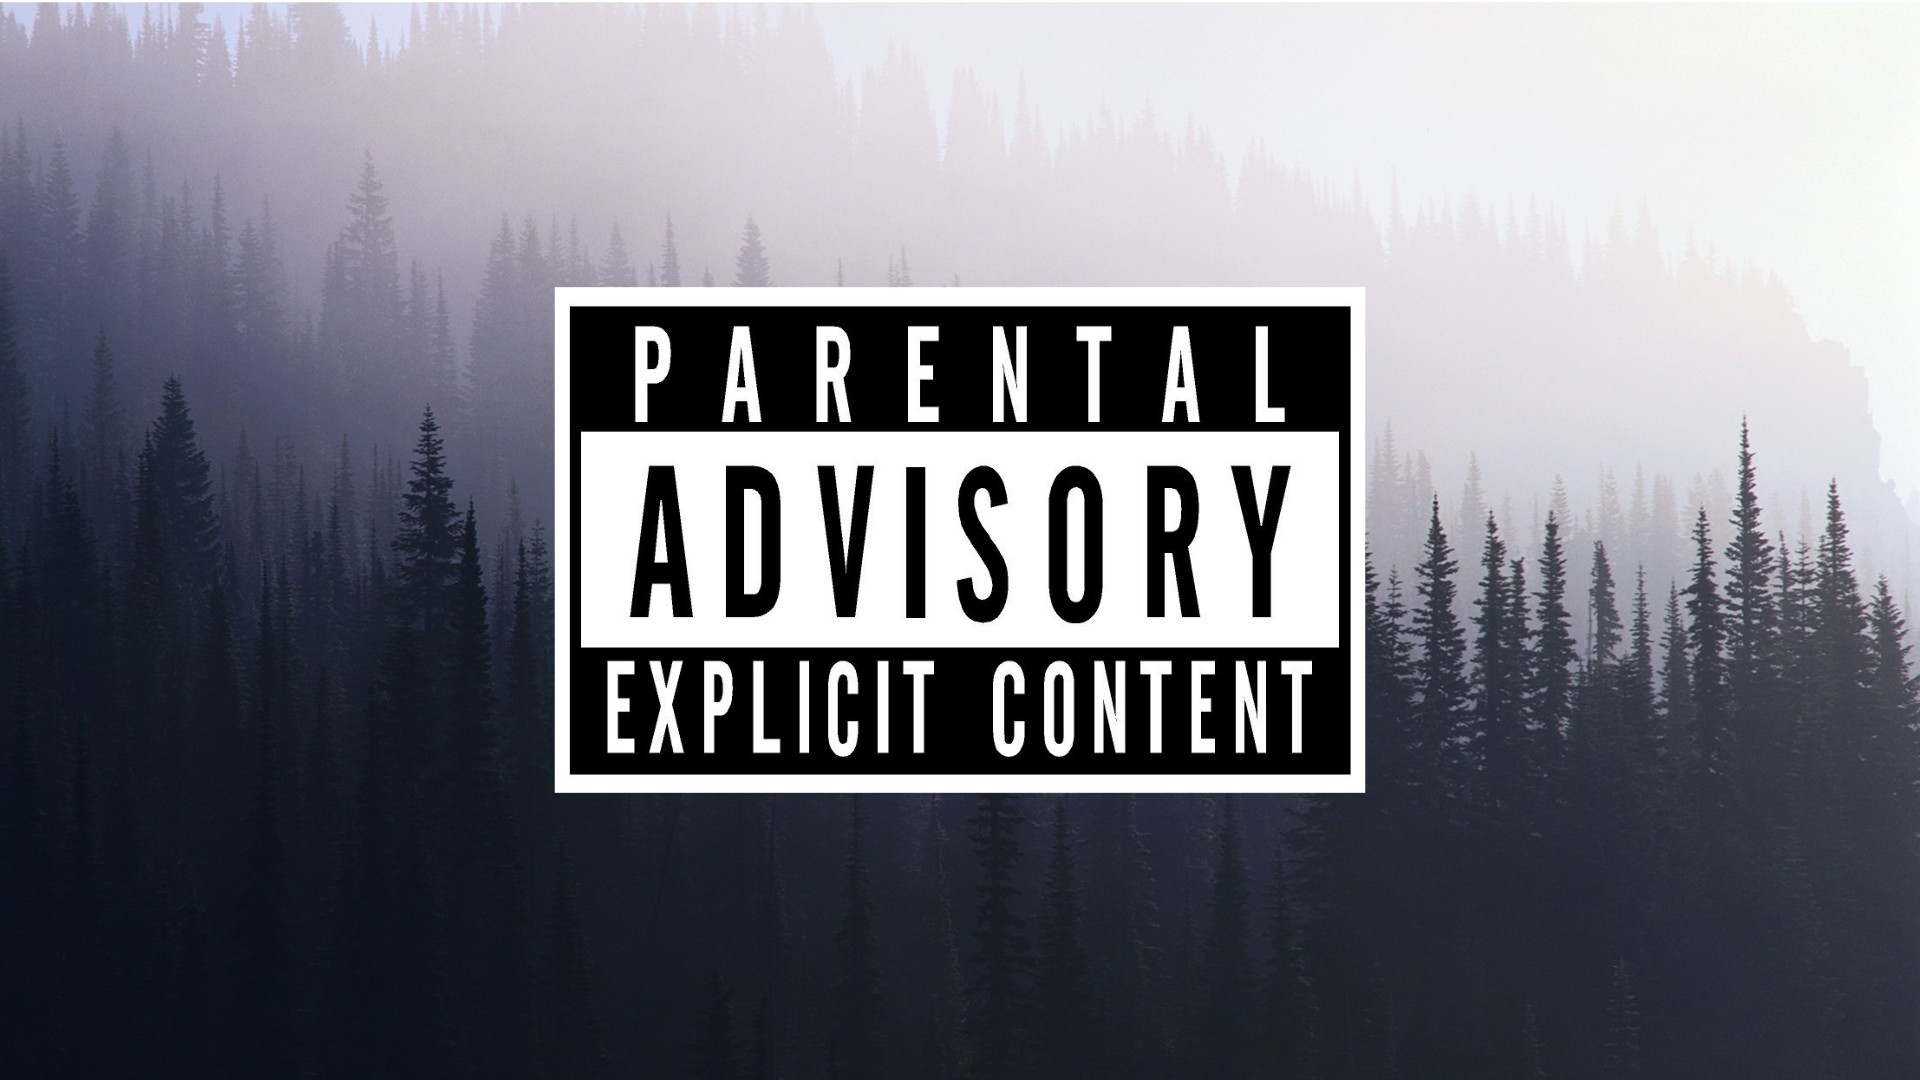 Parental Advisory HD Wallpaper